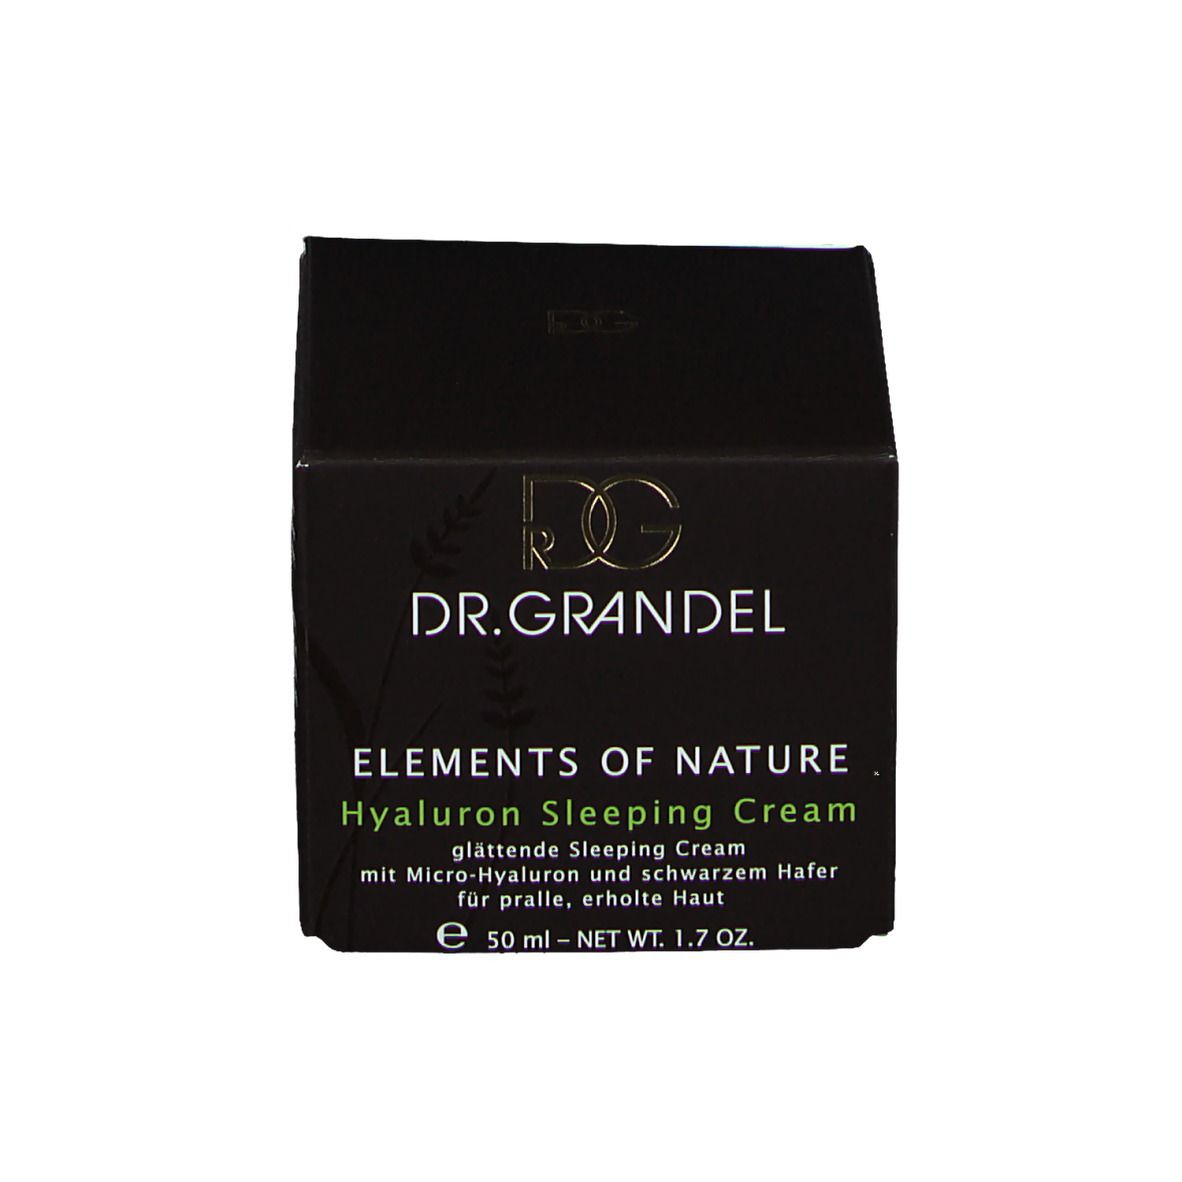 Dr. Grandel Elements pf Nature Hyaluron Sleeping Cream